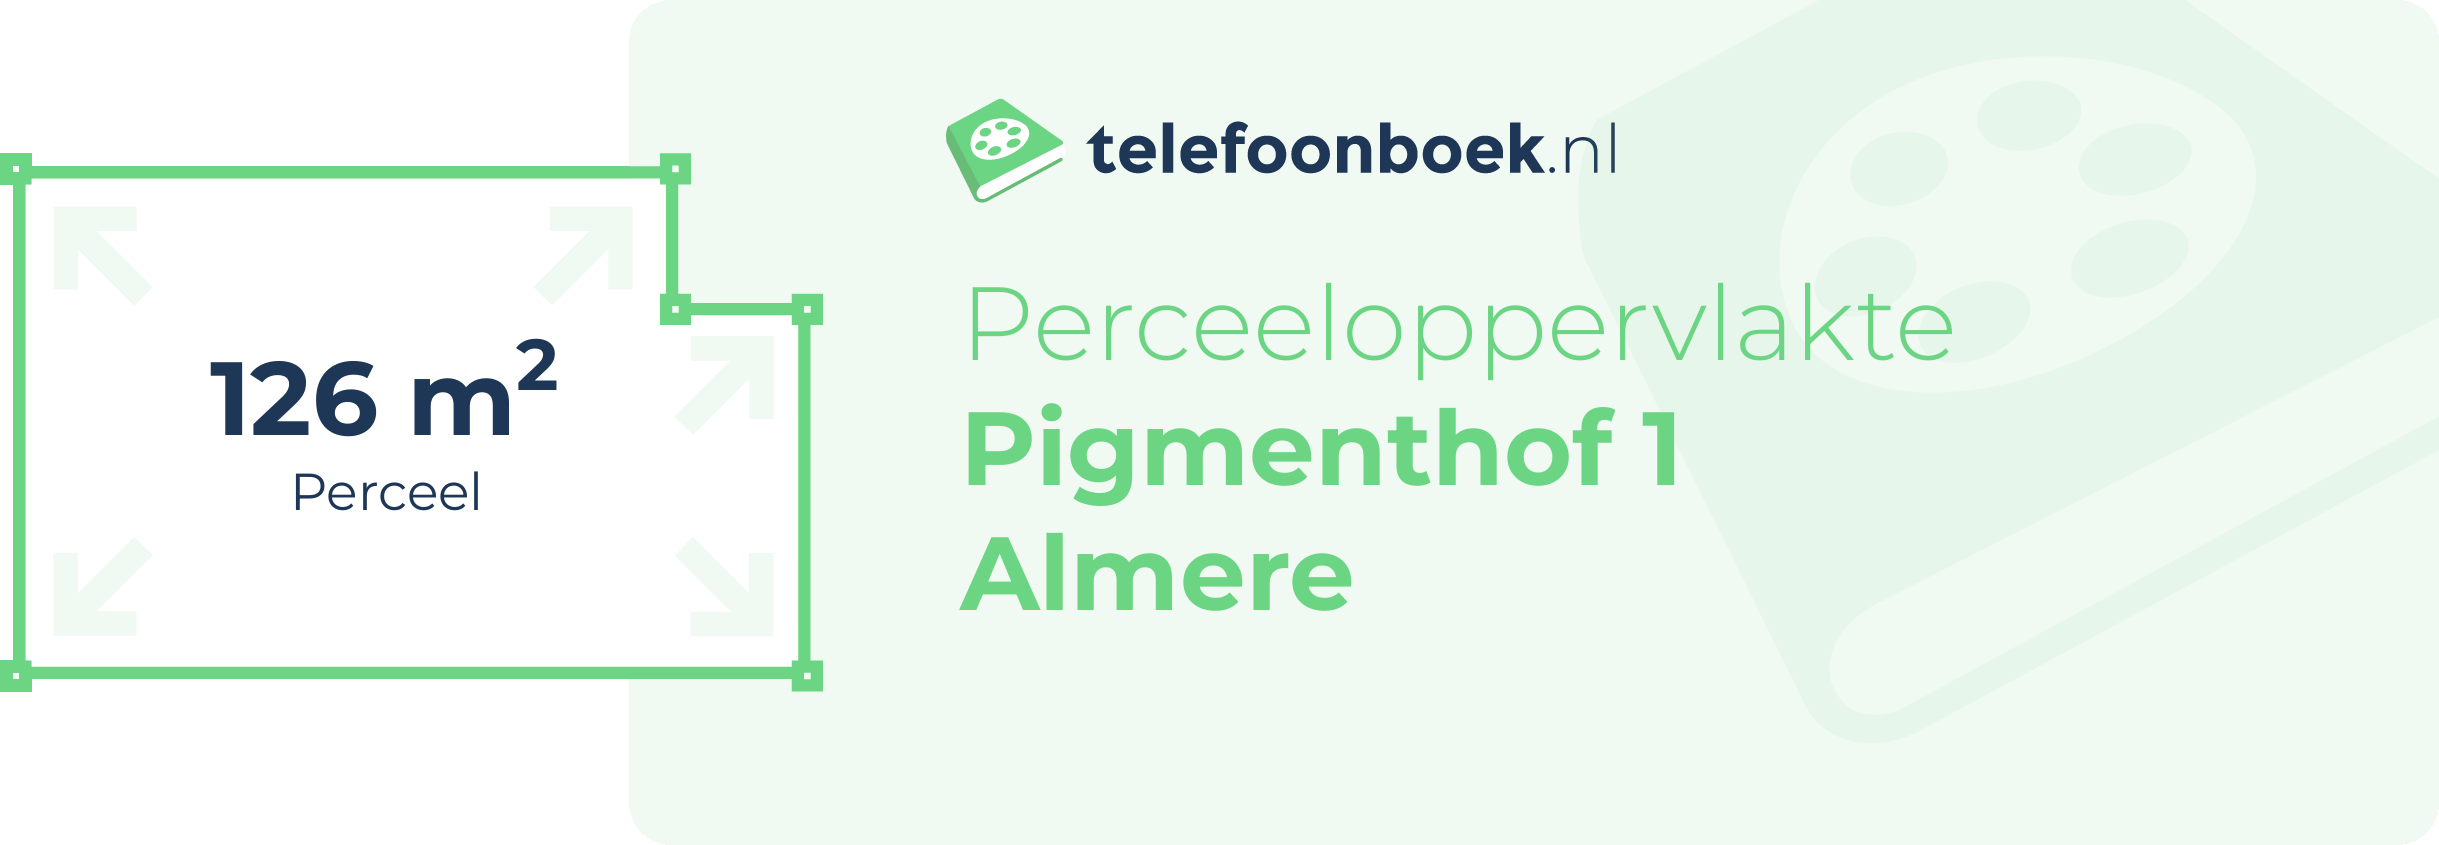 Perceeloppervlakte Pigmenthof 1 Almere